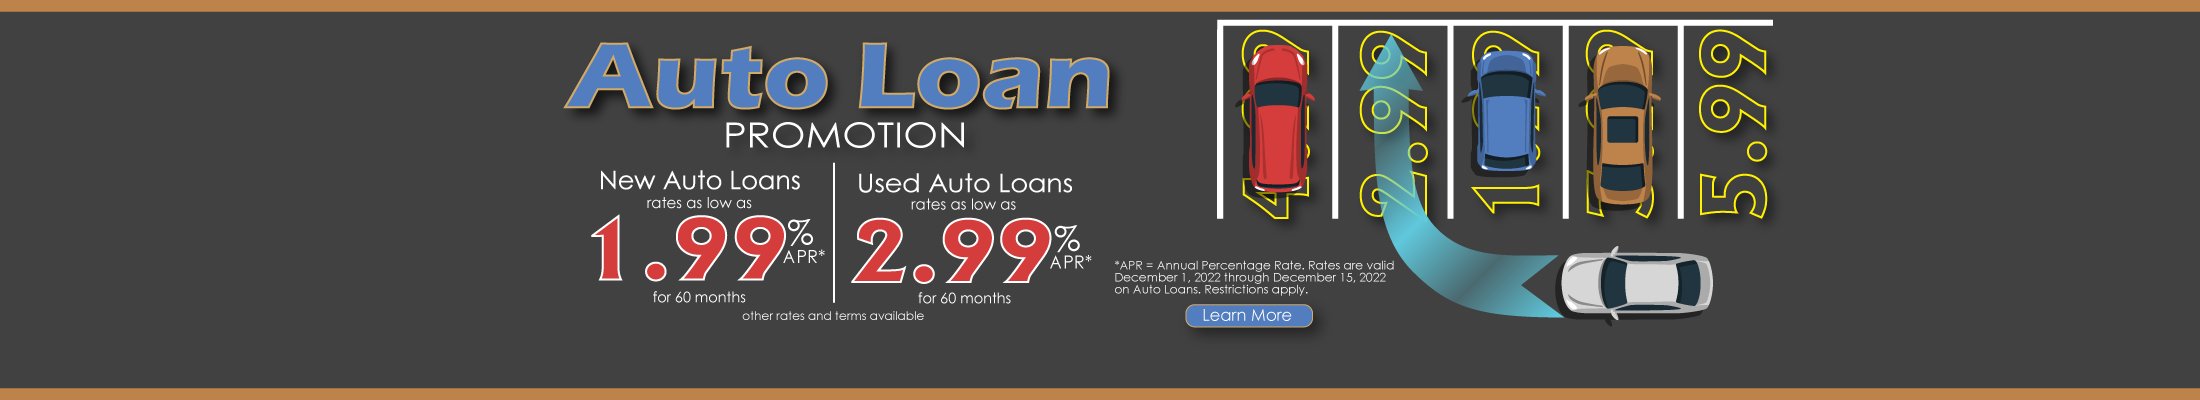 Auto Loan 122022